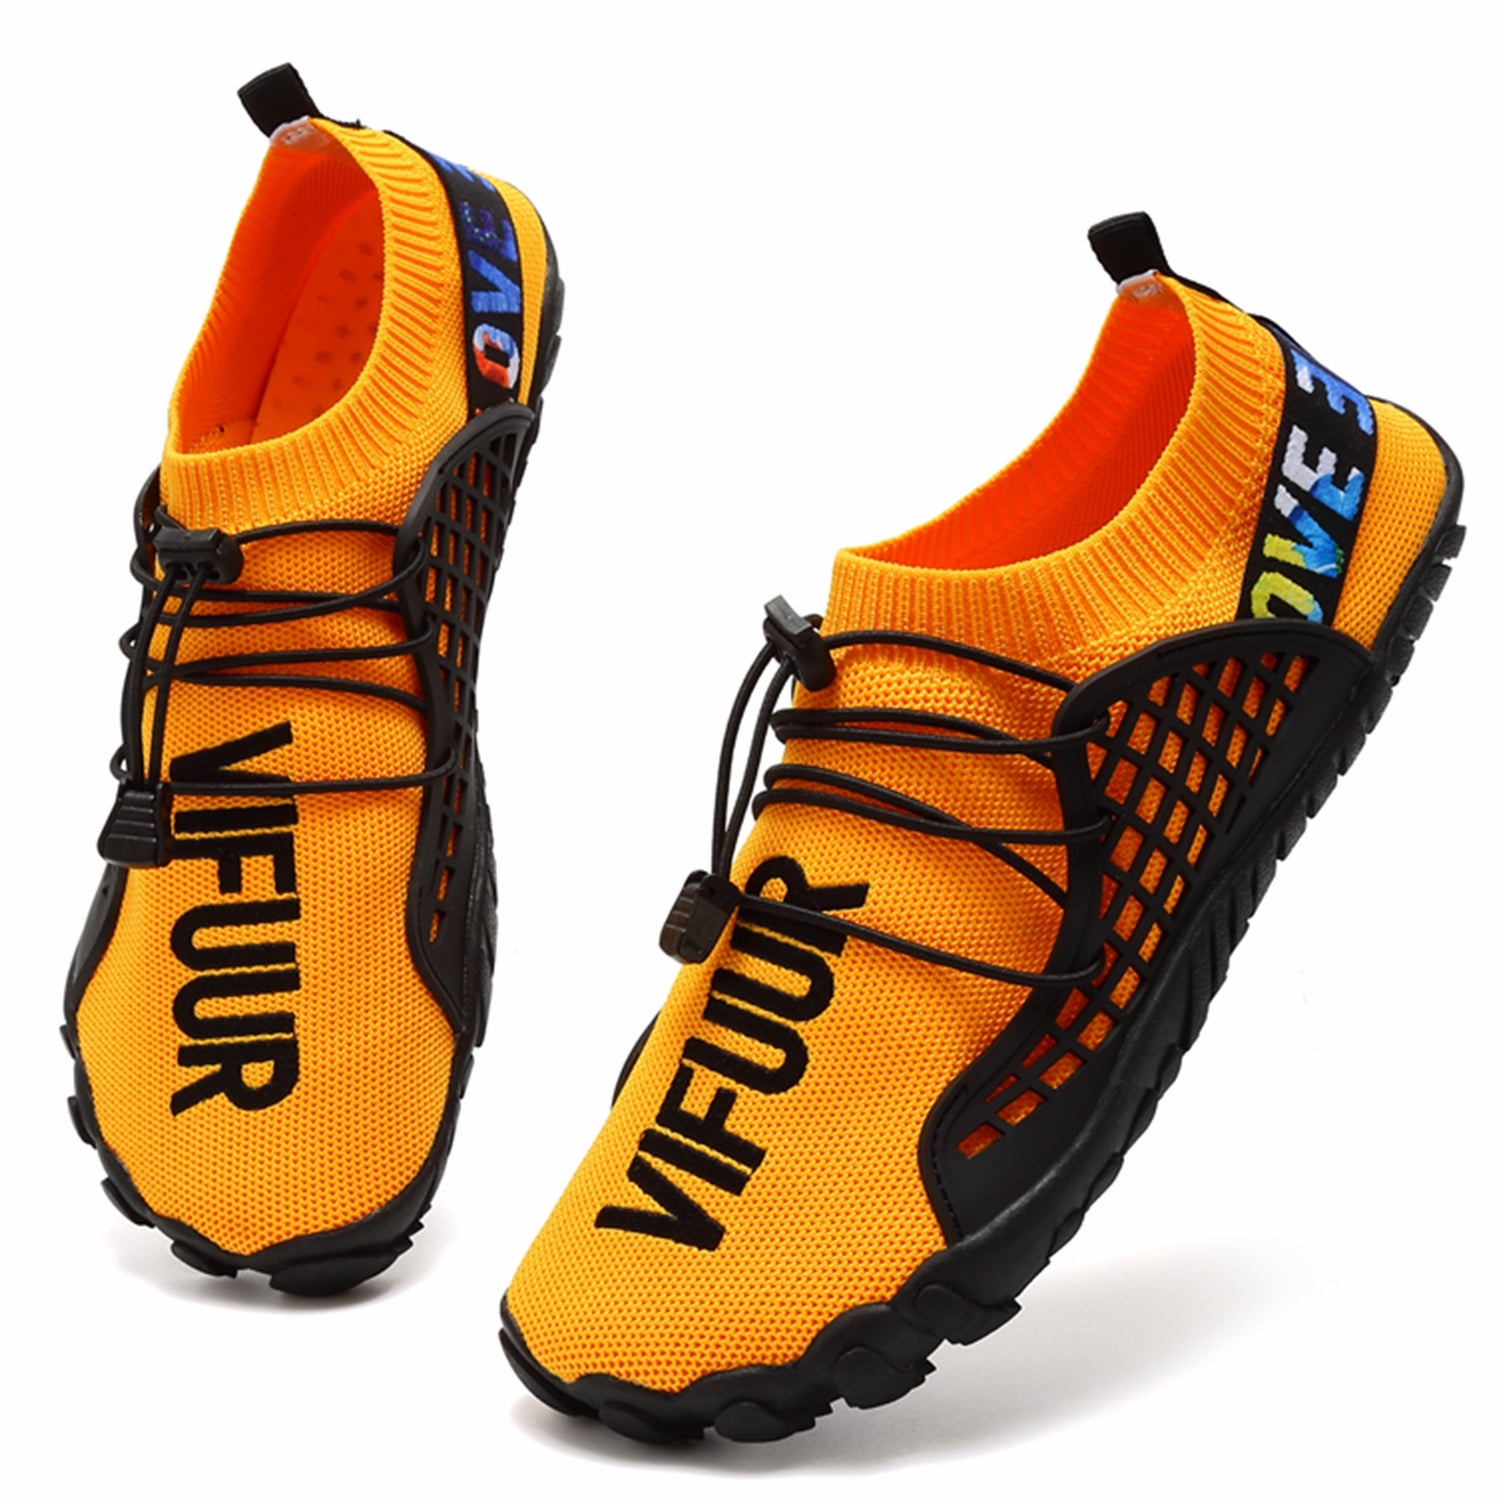 VIFUUR Knit Athletic Water Shoes for Men Vifuur